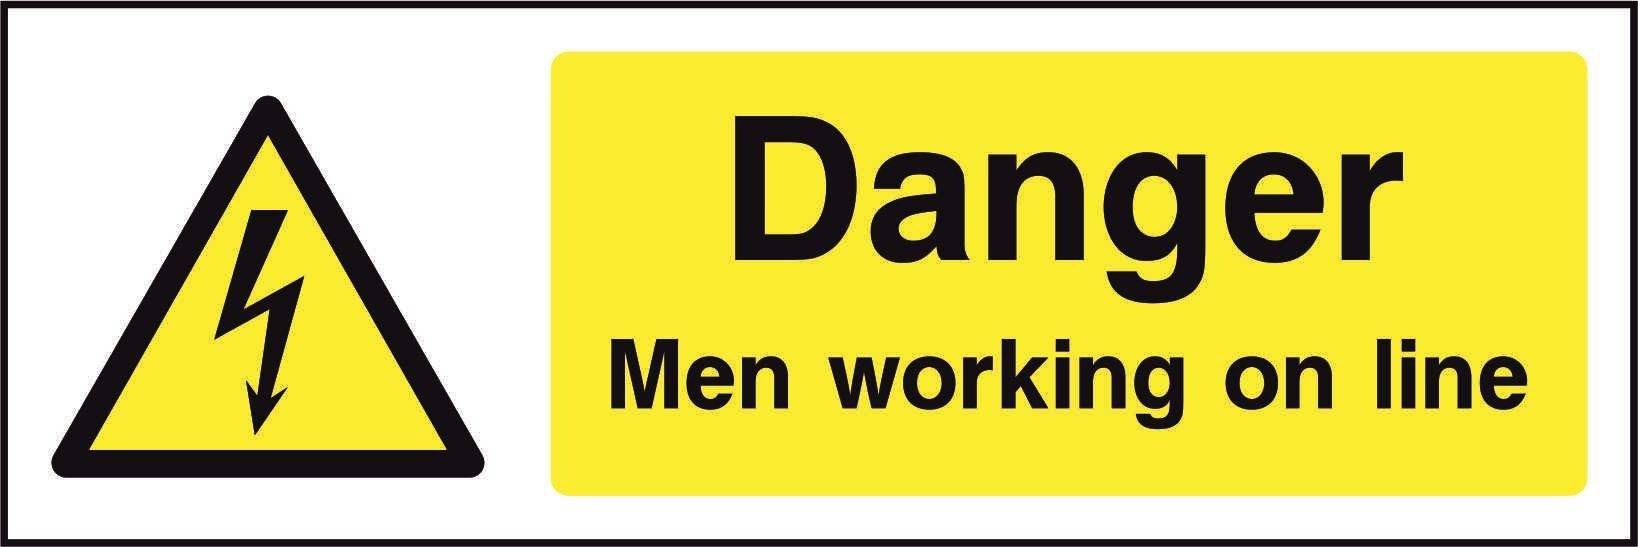 Danger Men working on line